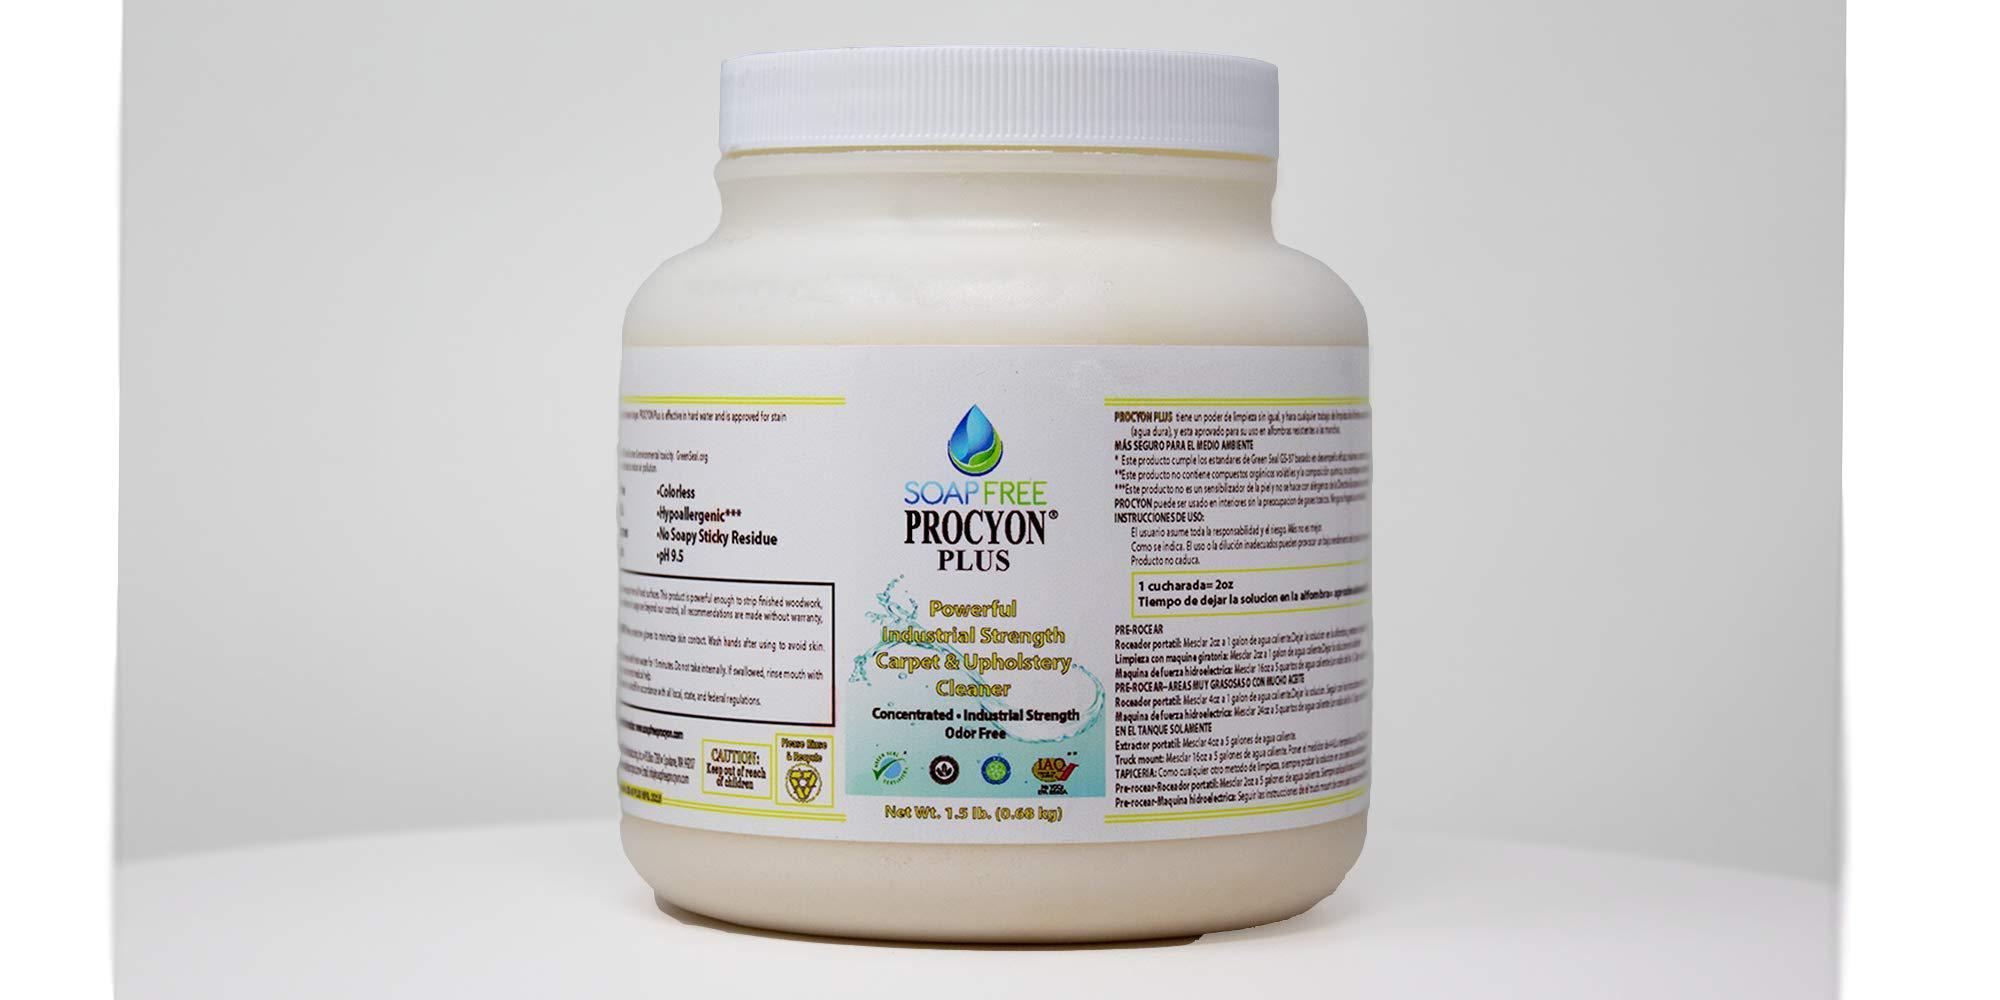 soap free procyon plus powder carpet cleaner 1.5 lb. jar